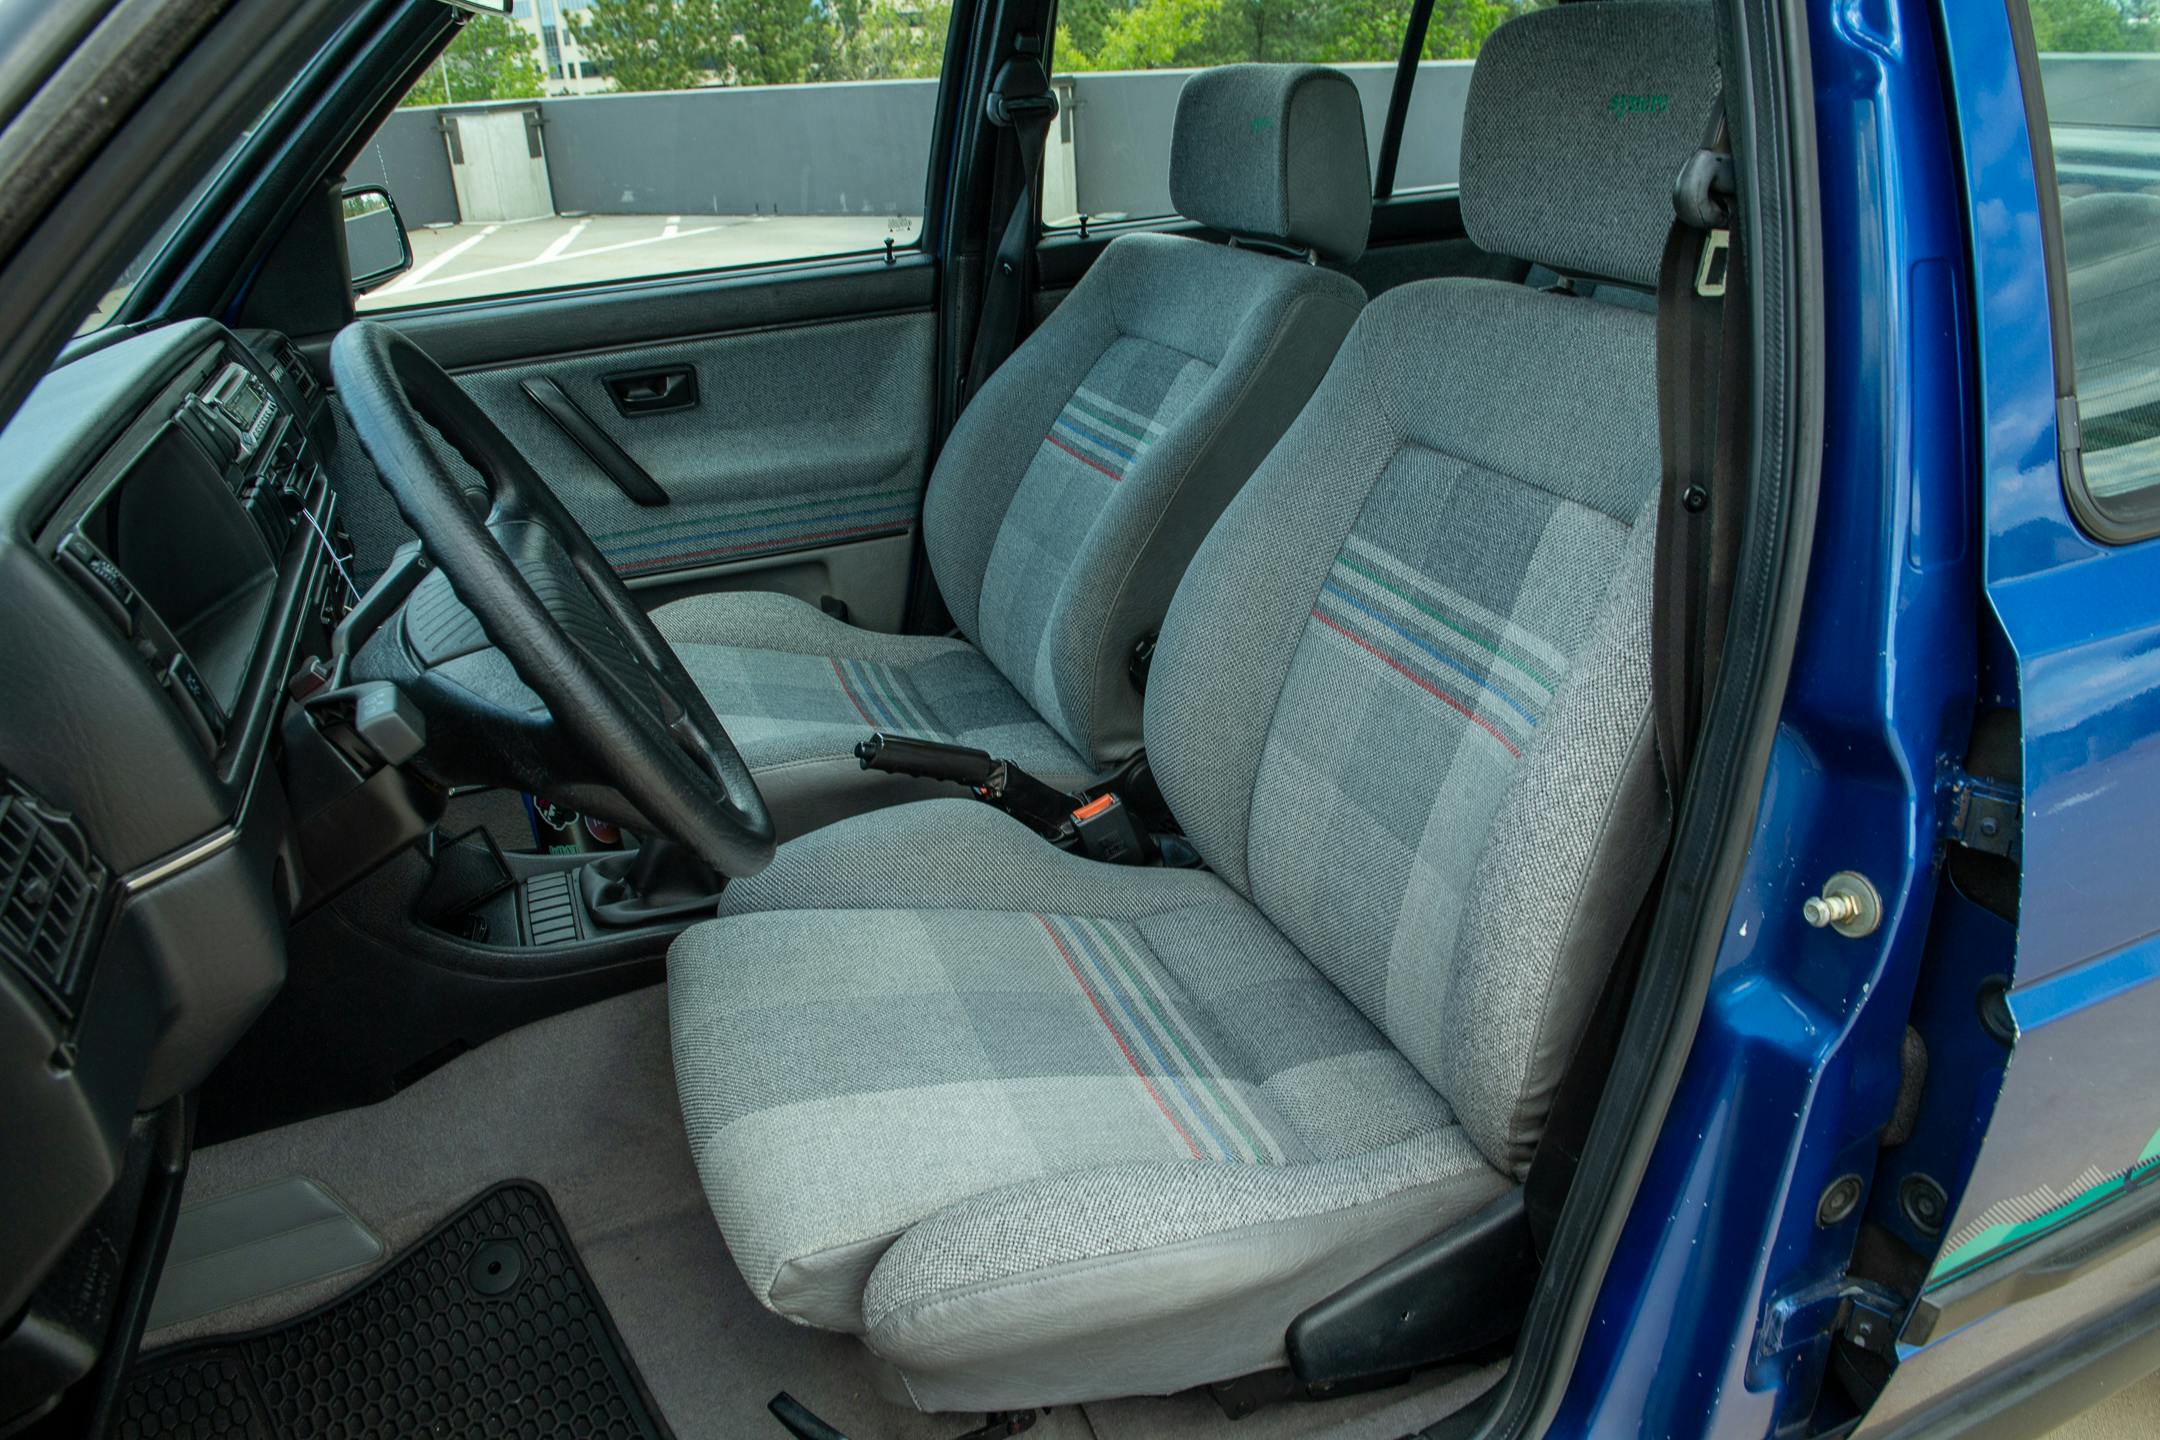 Volkswagen Golf Country interior seats